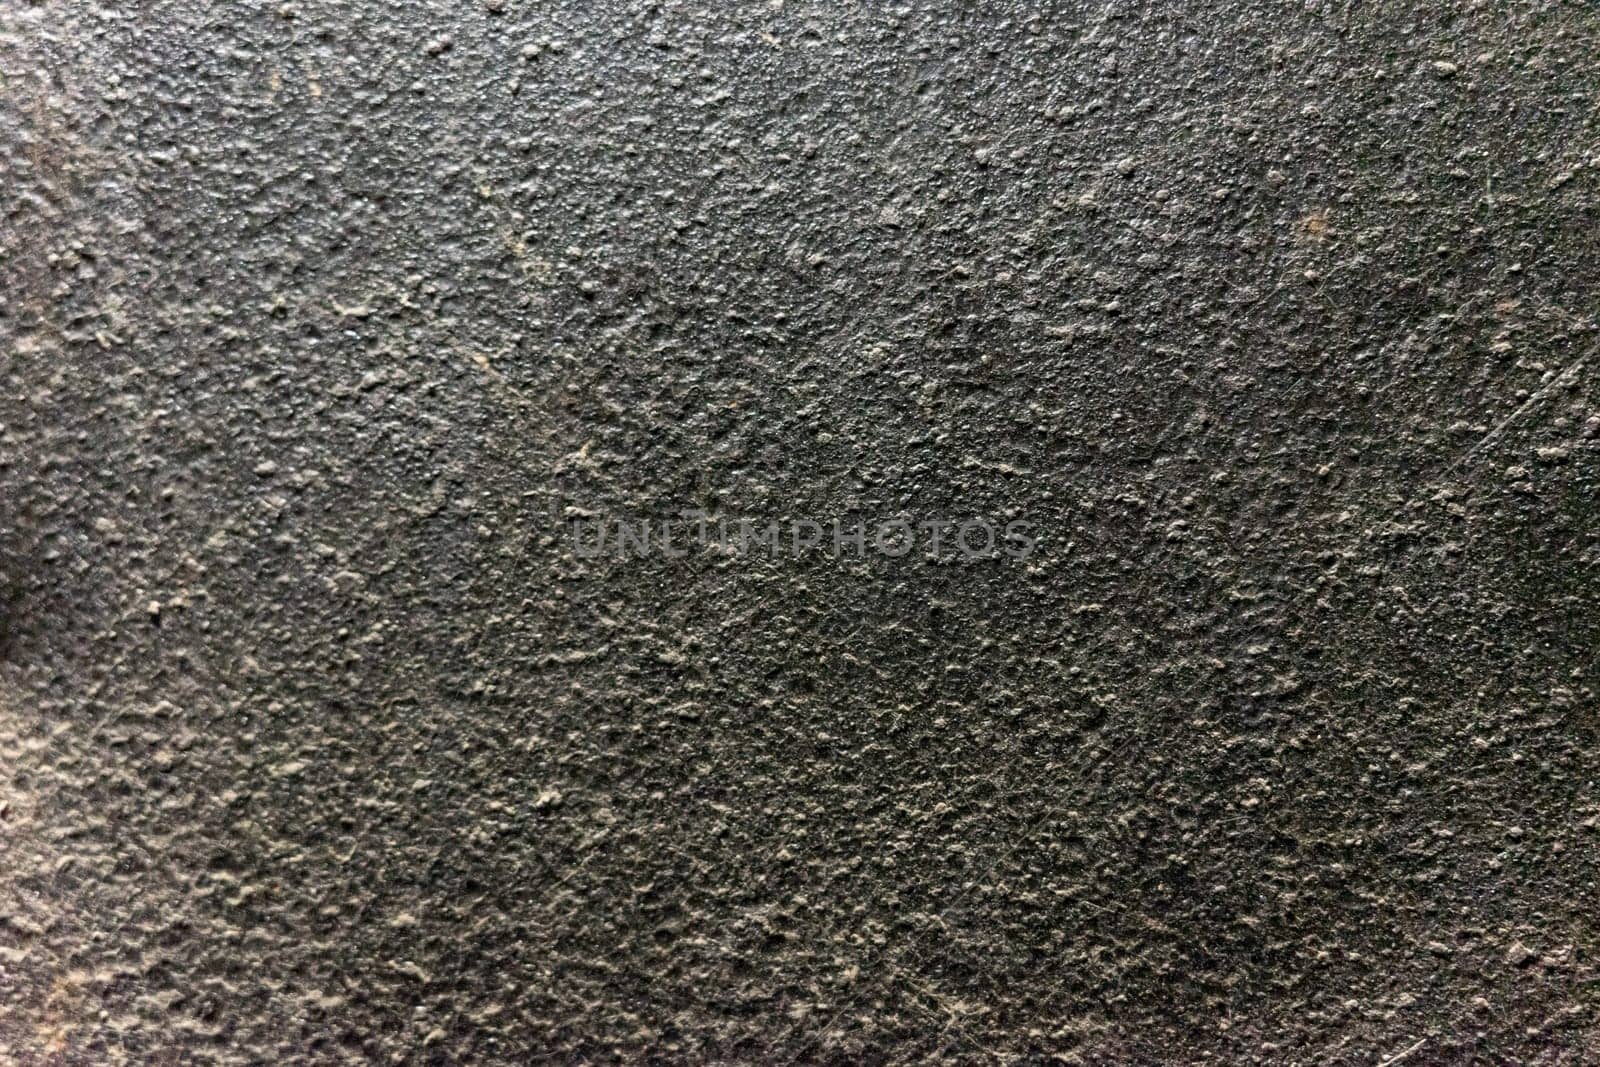 Rough concrete surface. Concrete surface texture by Serhii_Voroshchuk